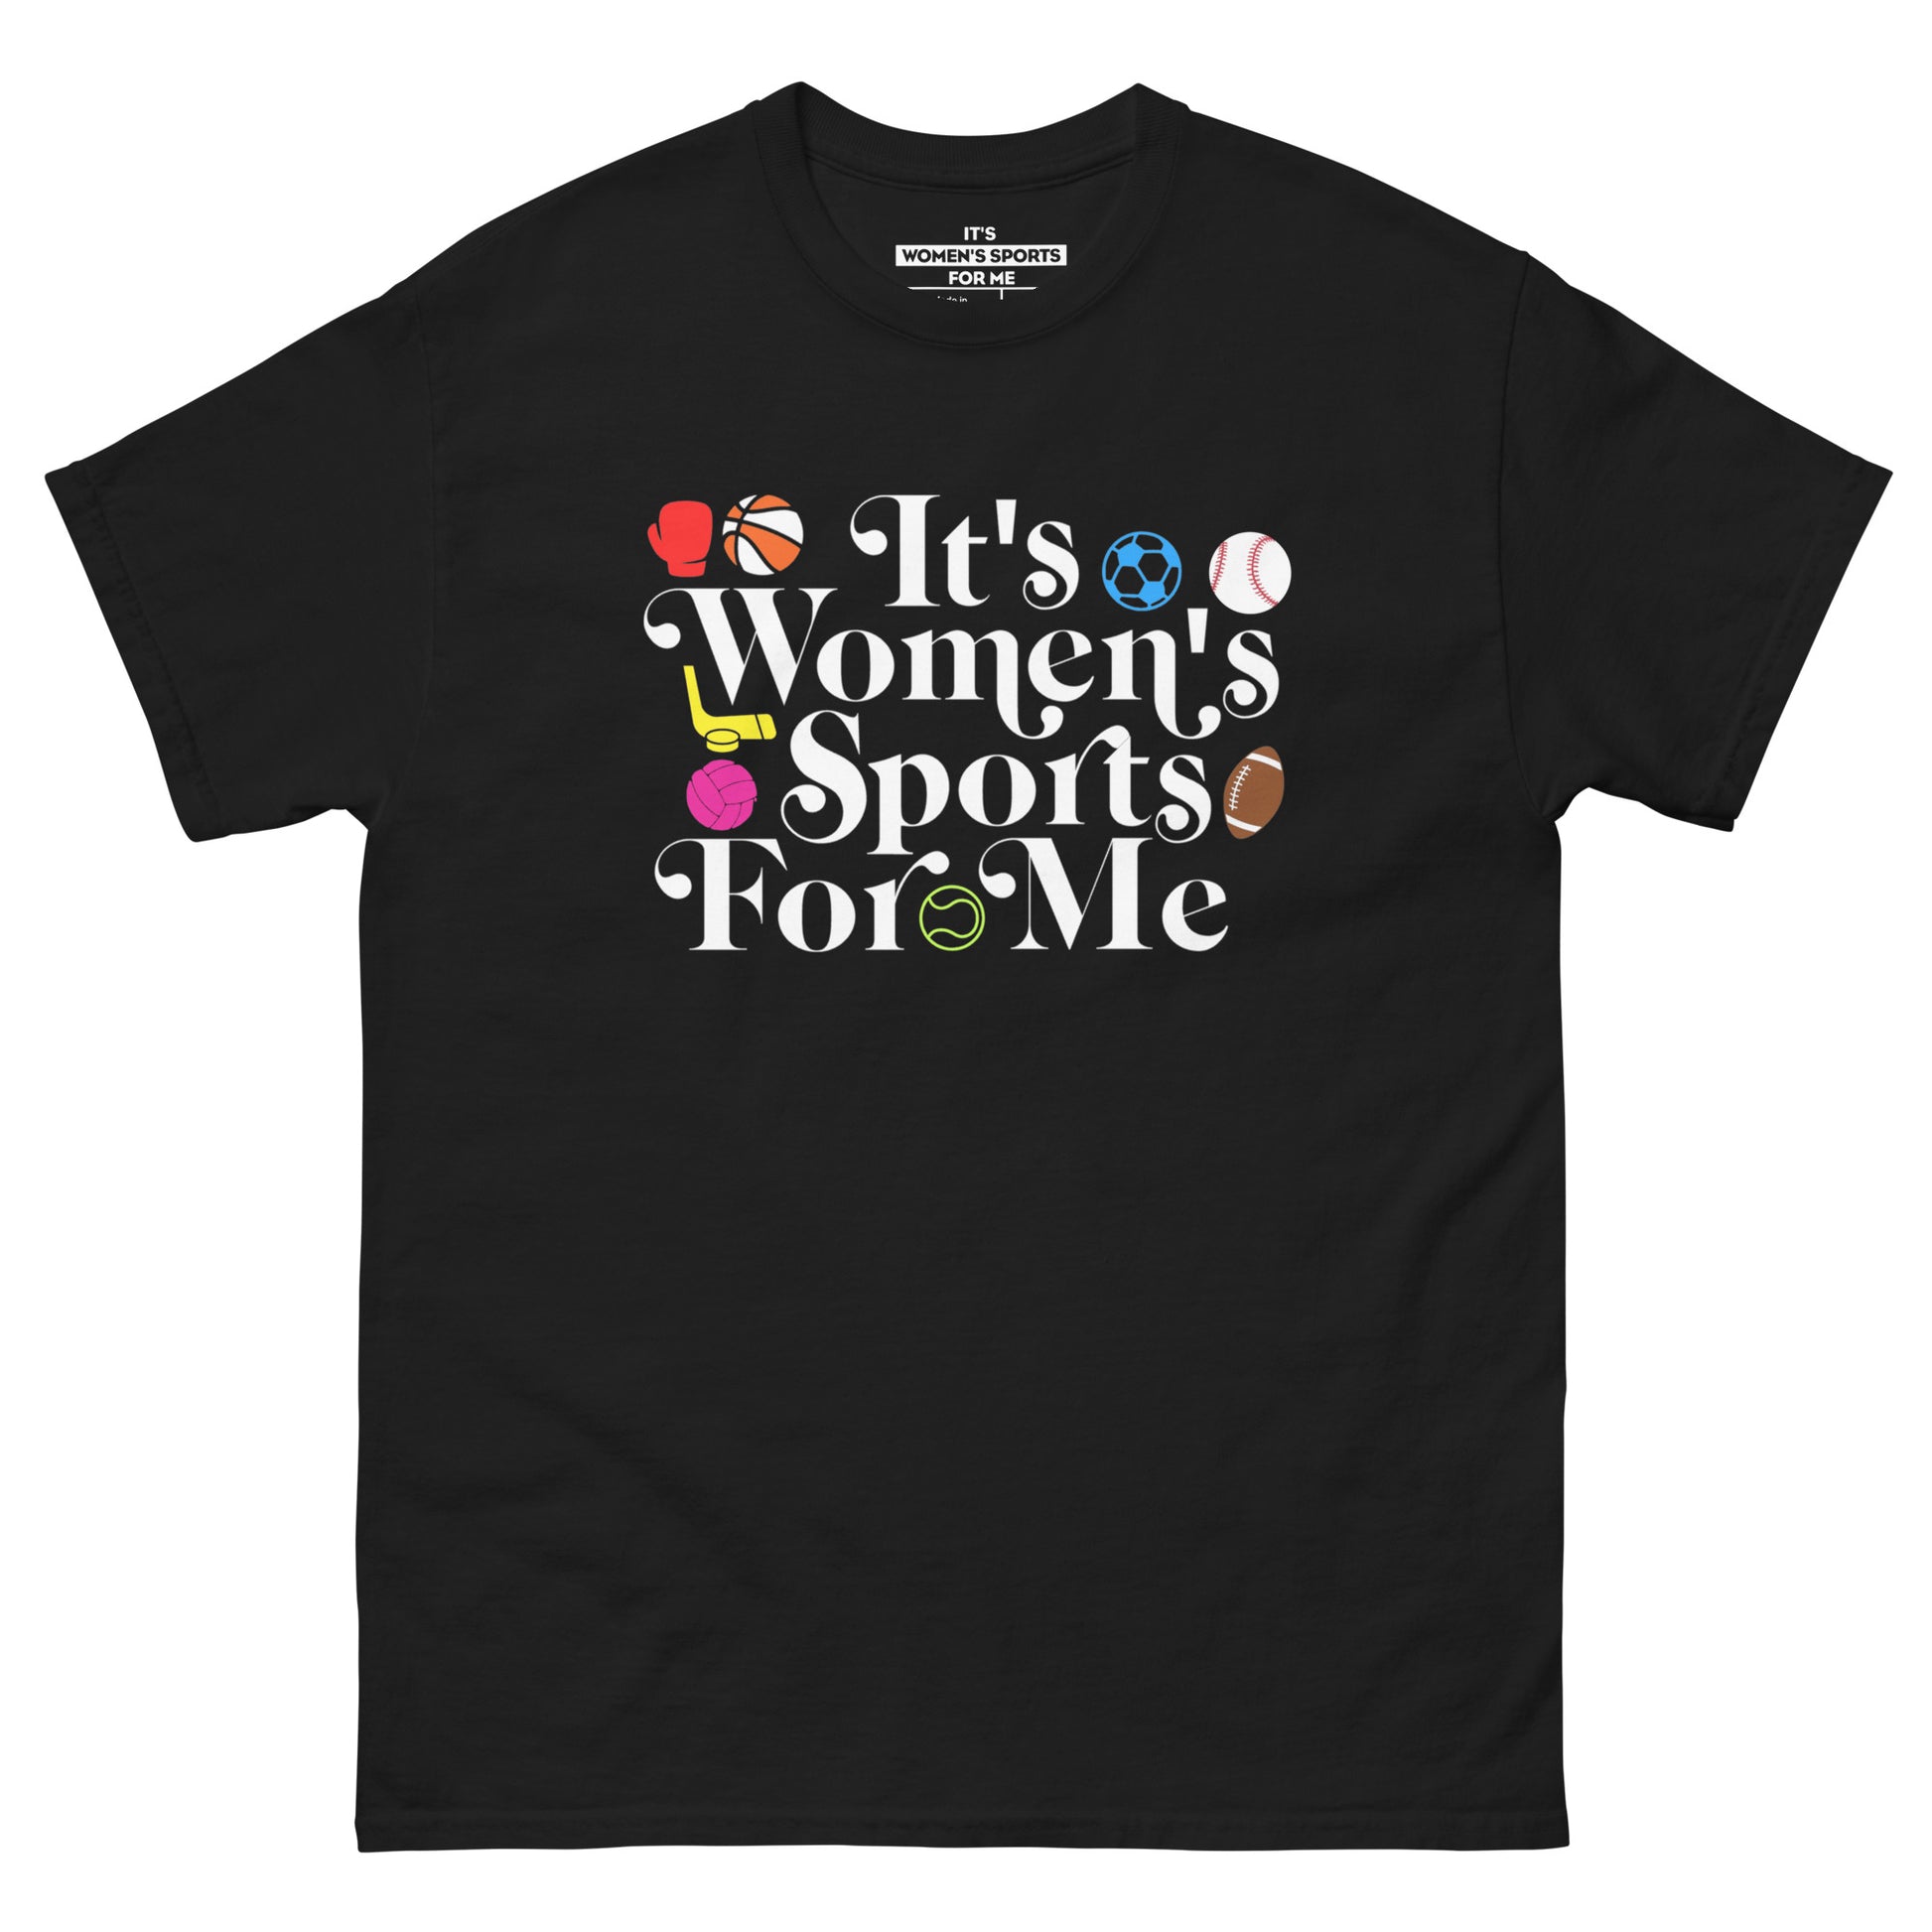 It's women's sports for me™️ retro - Klever Shirtz